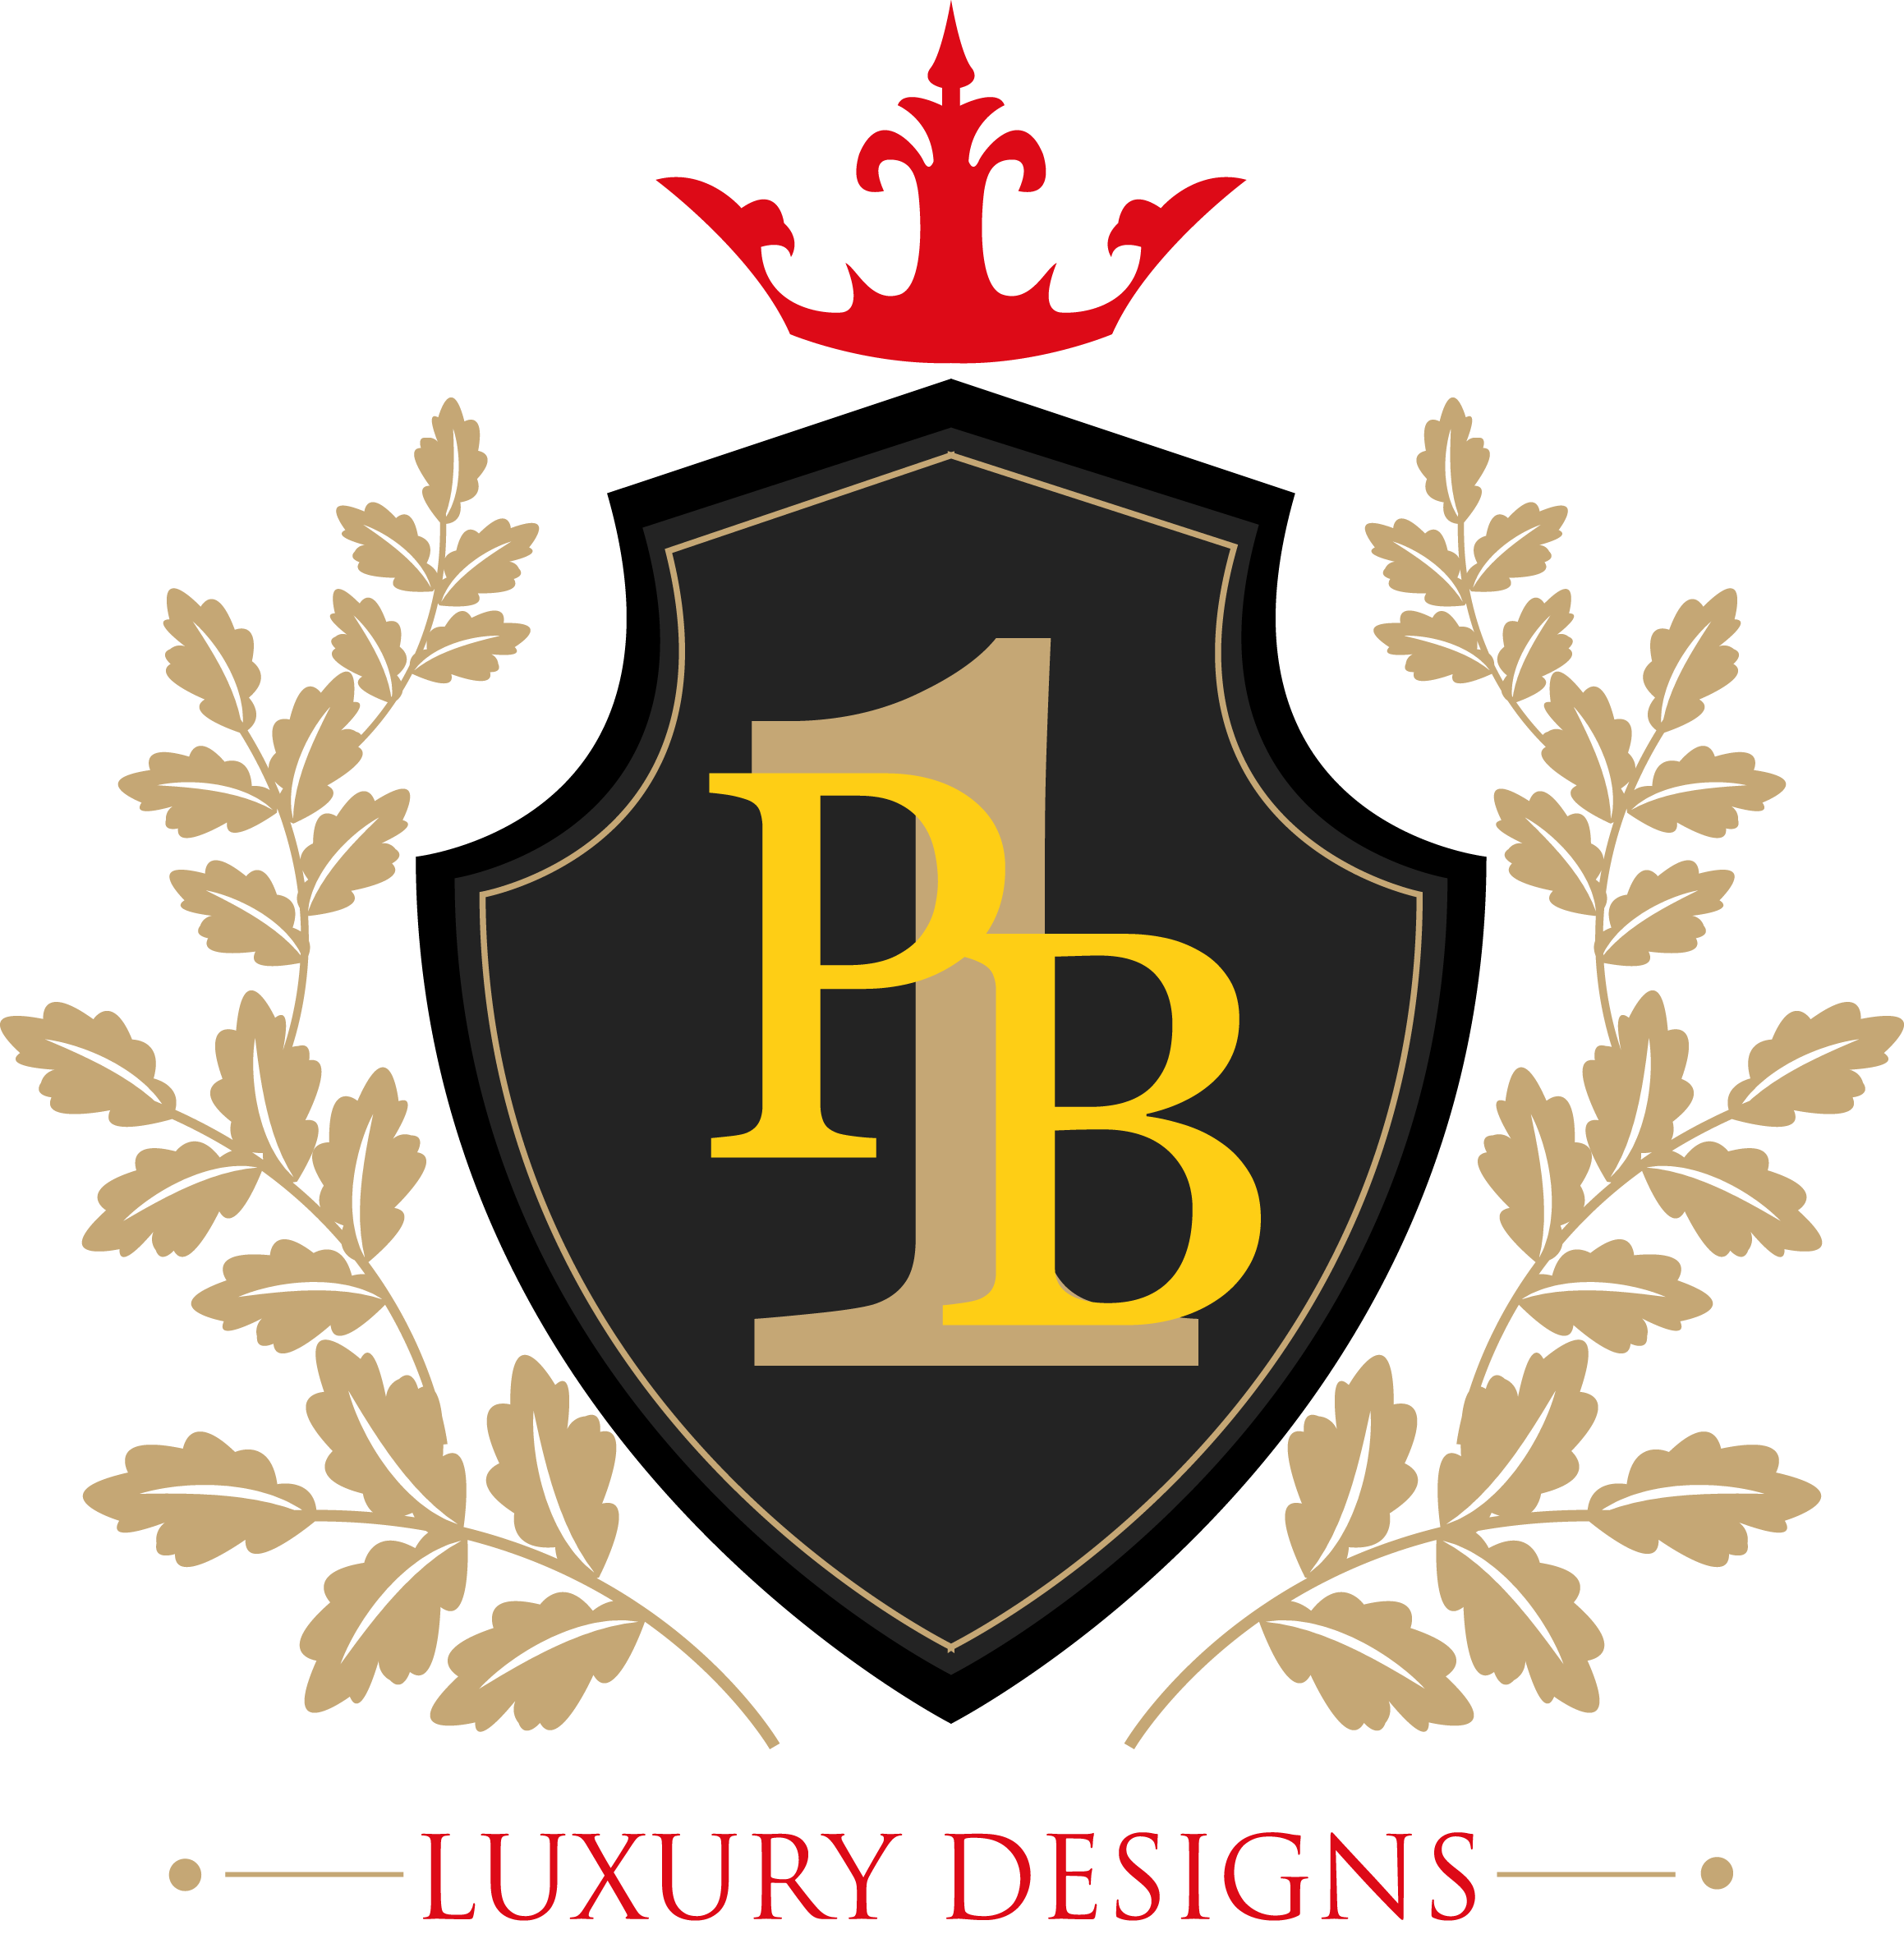 PB1 Luxury Designs